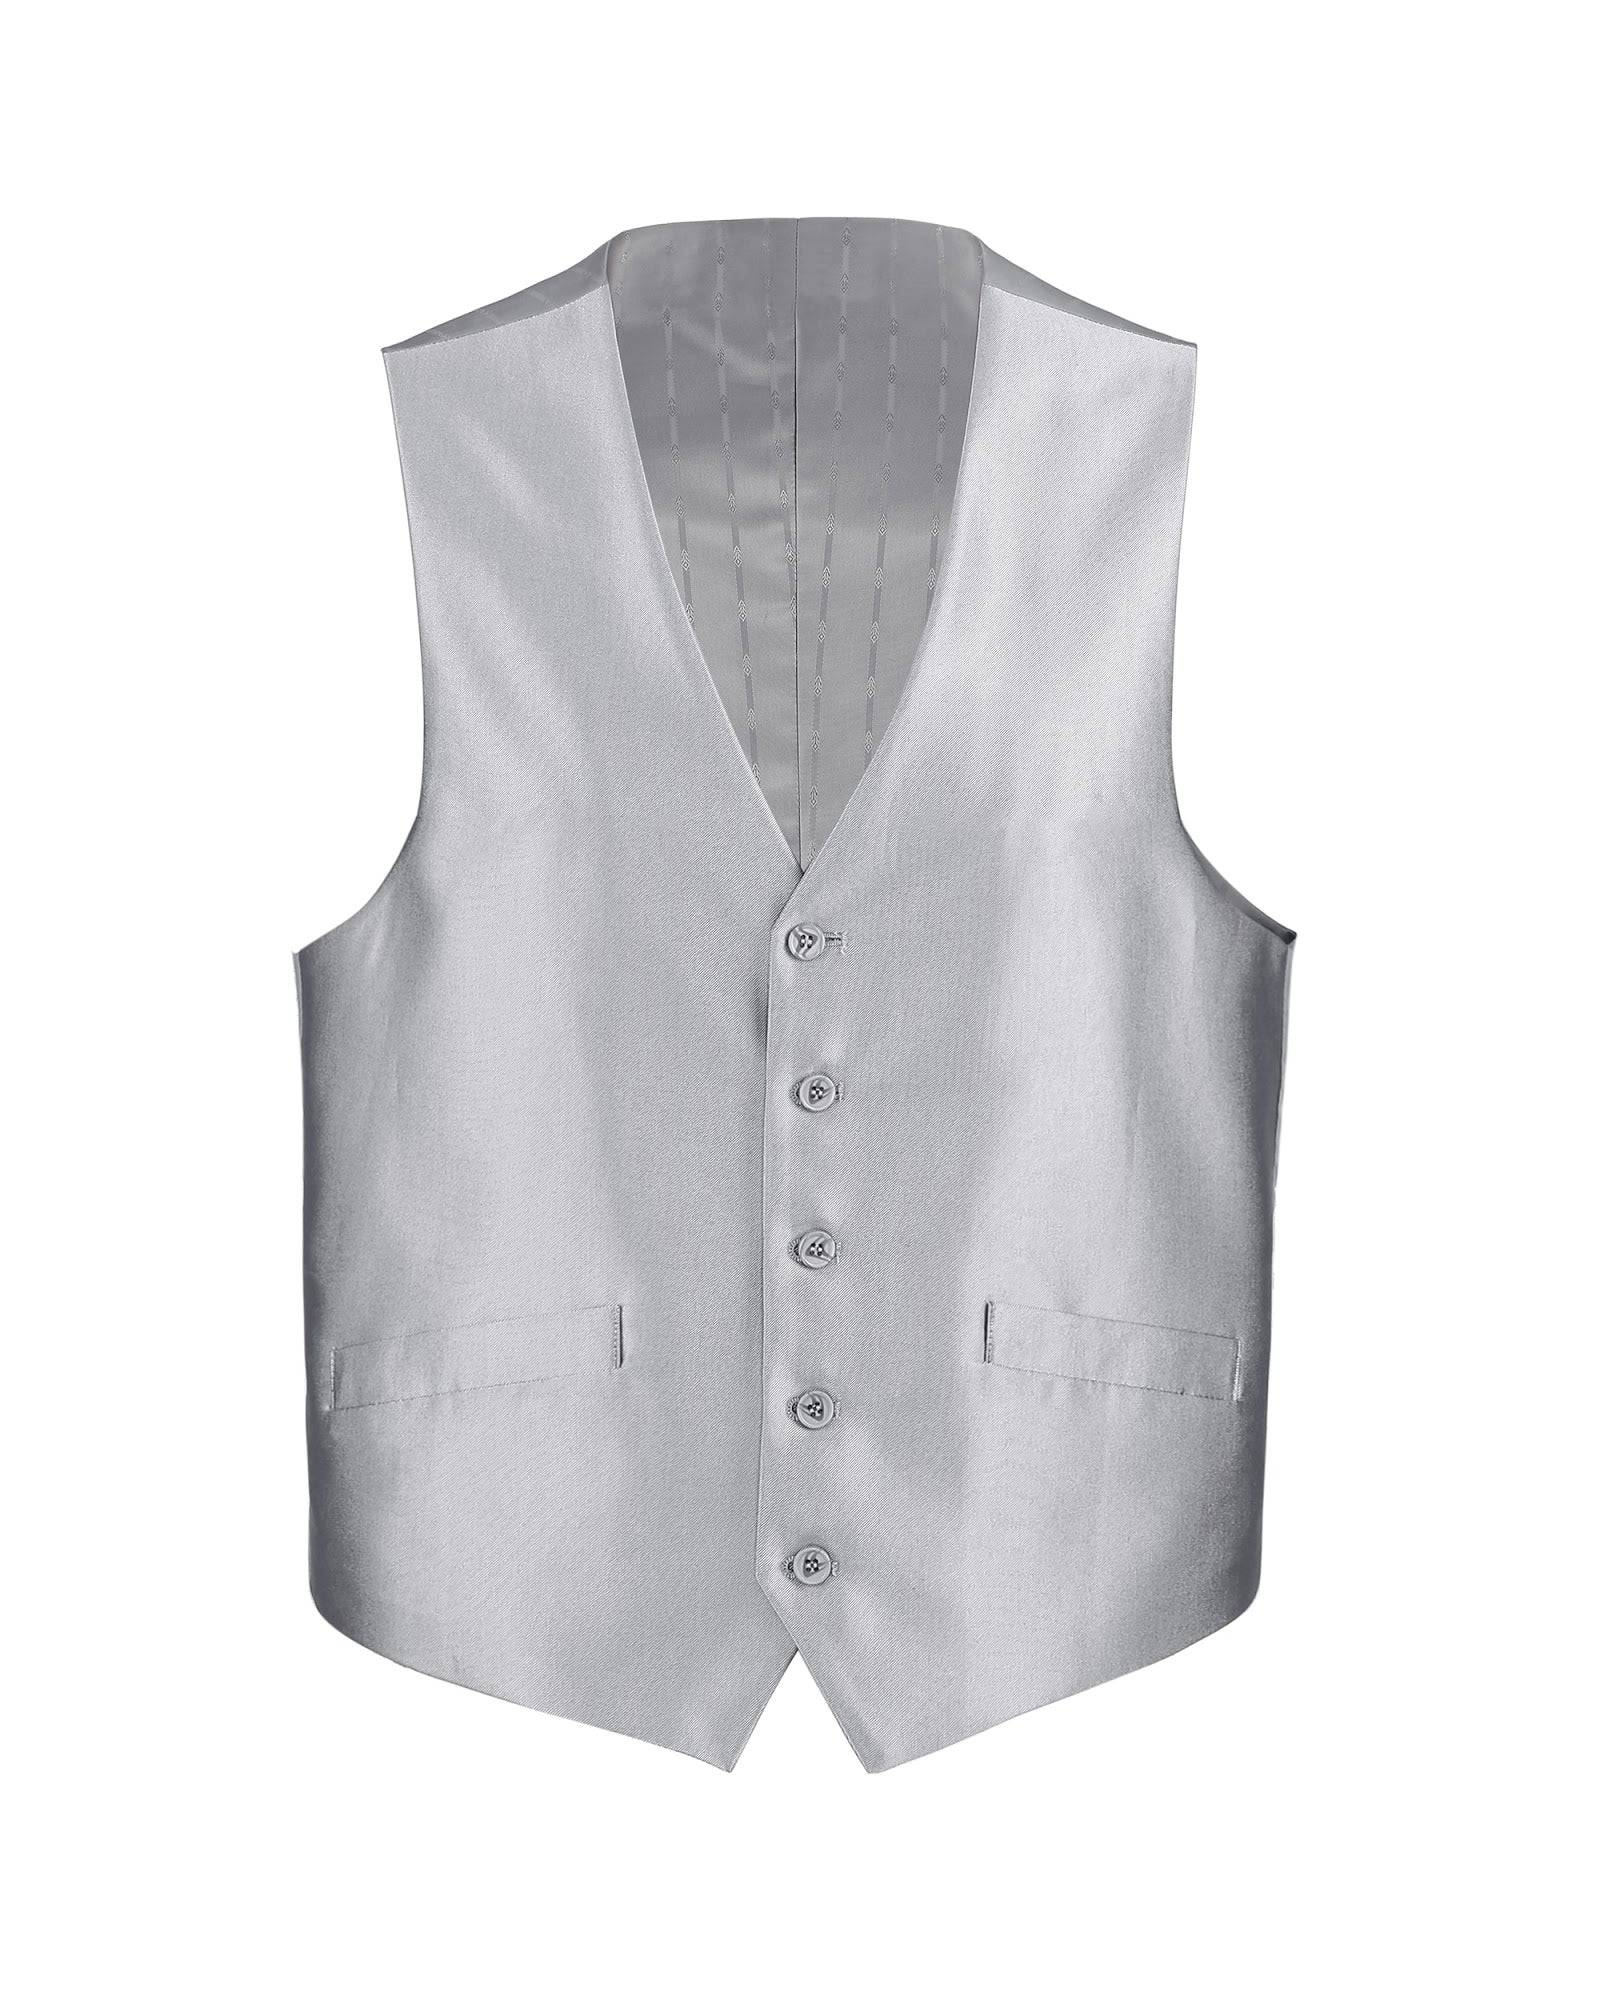 Suit Vest Luster Silver - Rainwater's Men's Clothing and Tuxedo Rental